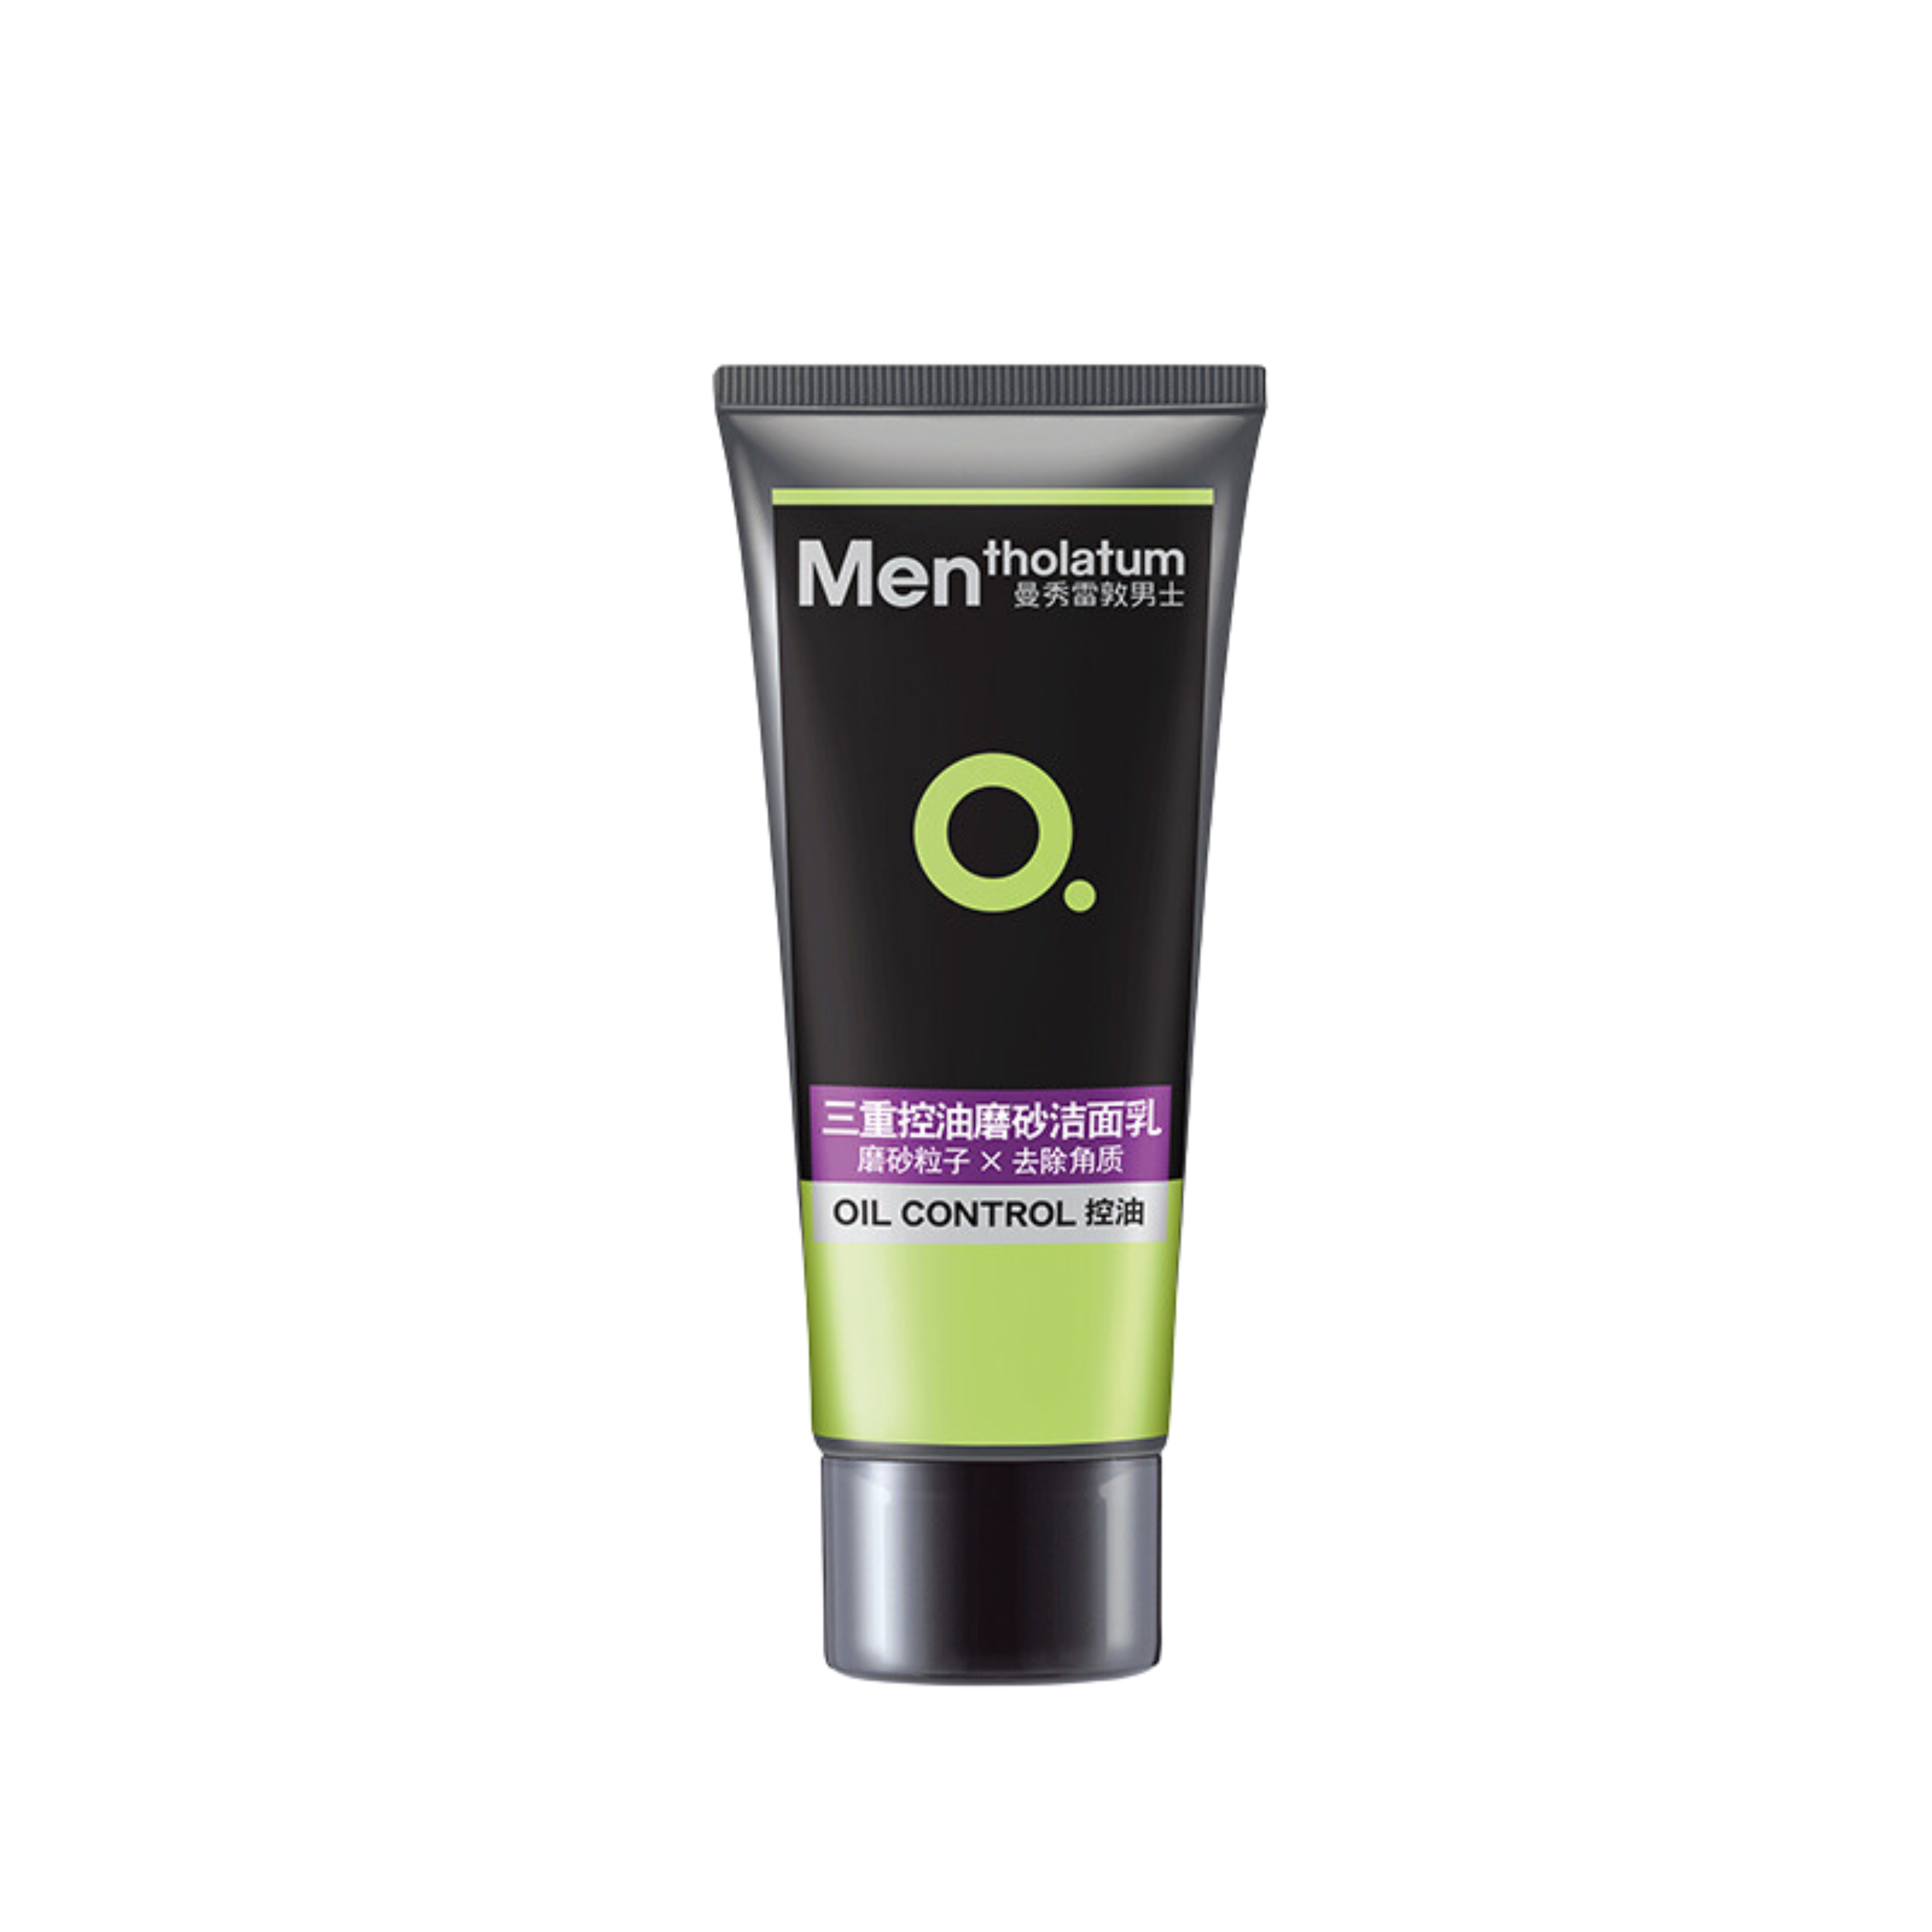 Mentholatum Triple Oil Control Scrub Facial Cleanser For Men 100g 曼秀雷敦三重控油磨砂男士洁面乳